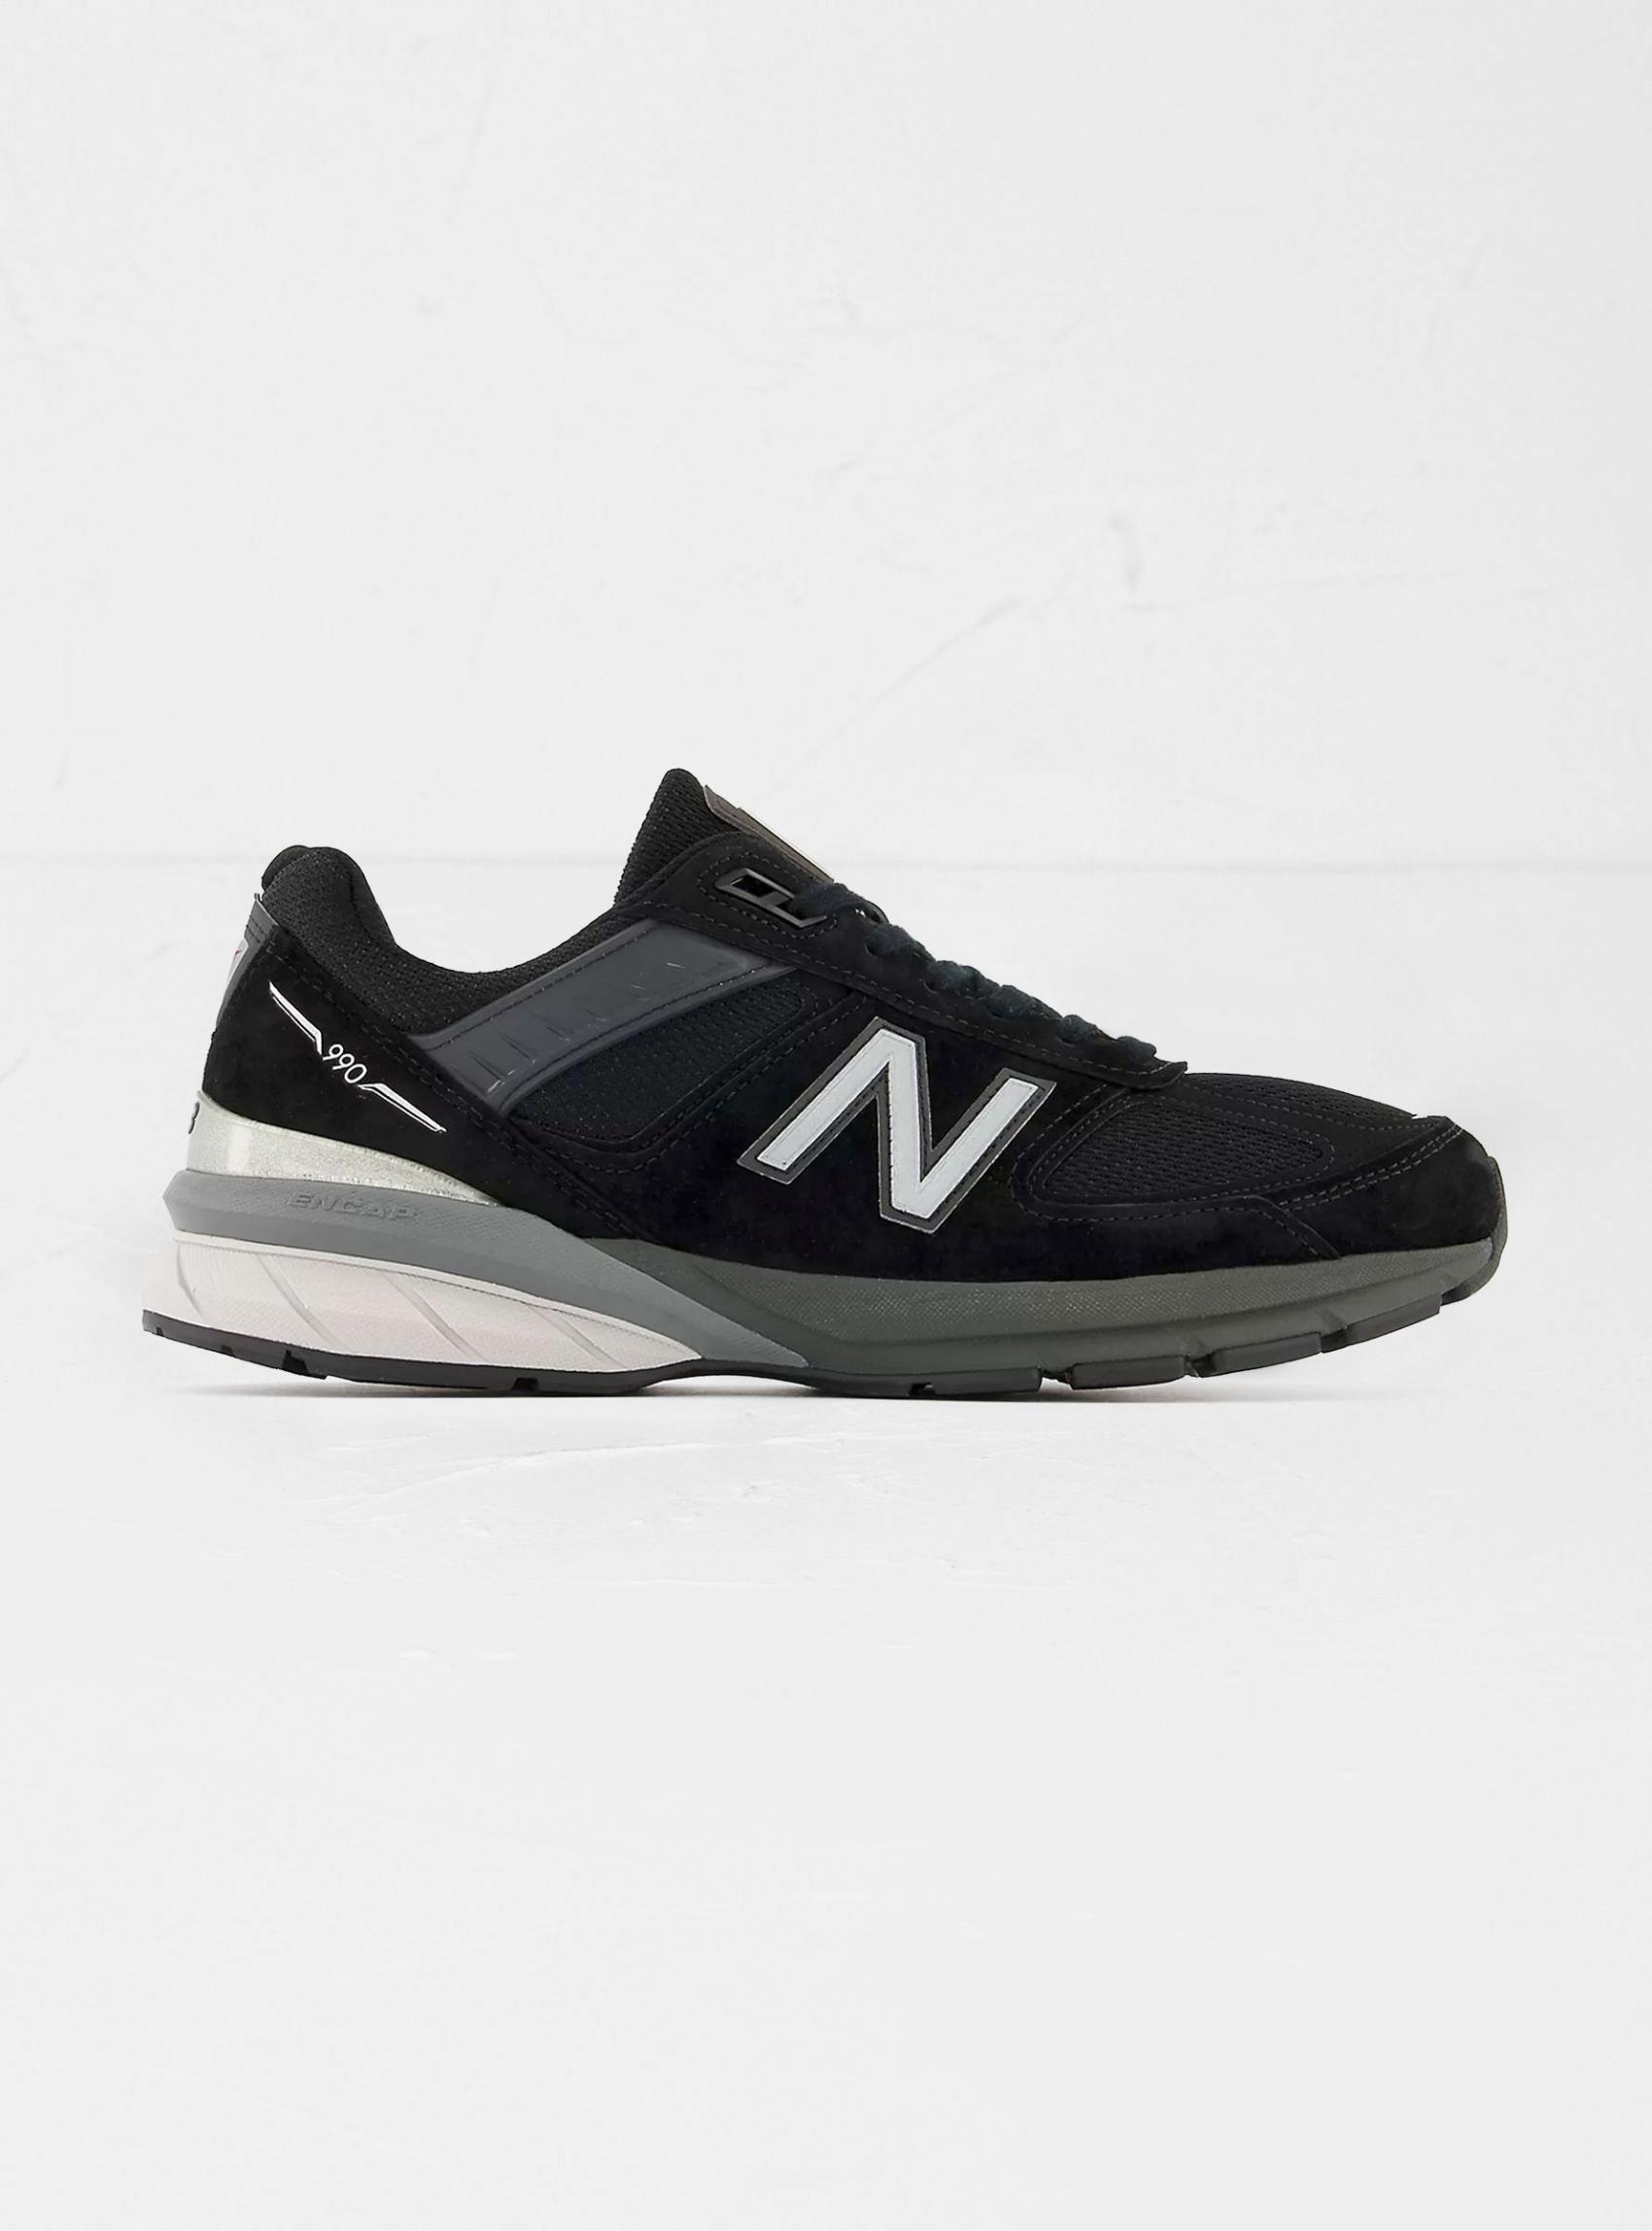 Footwear | New Balance Mens Made In Us M990Bk5 Trainers Black Black